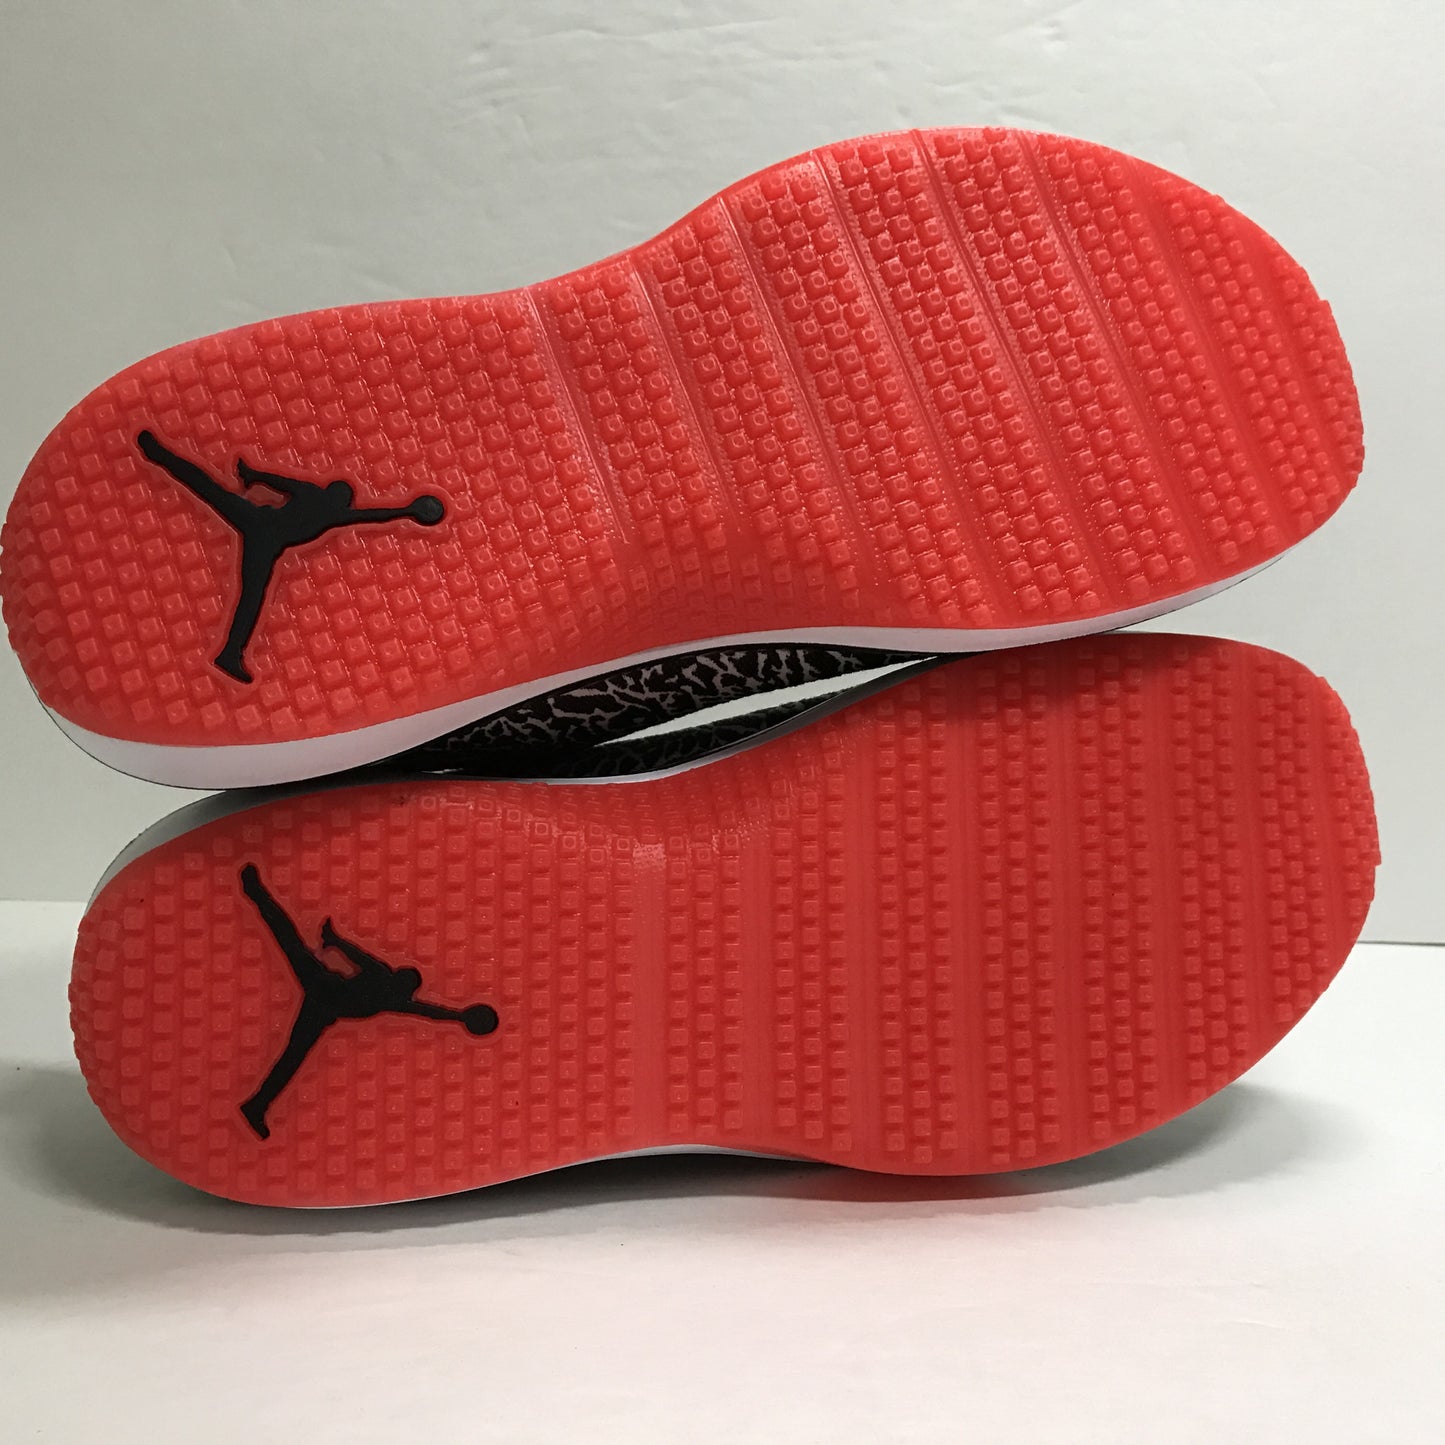 DS Nike Air Jordan Trainer 1 Black Elephant Print/Infrared  Low BG Size 7Y - DOPEFOOT
 - 8